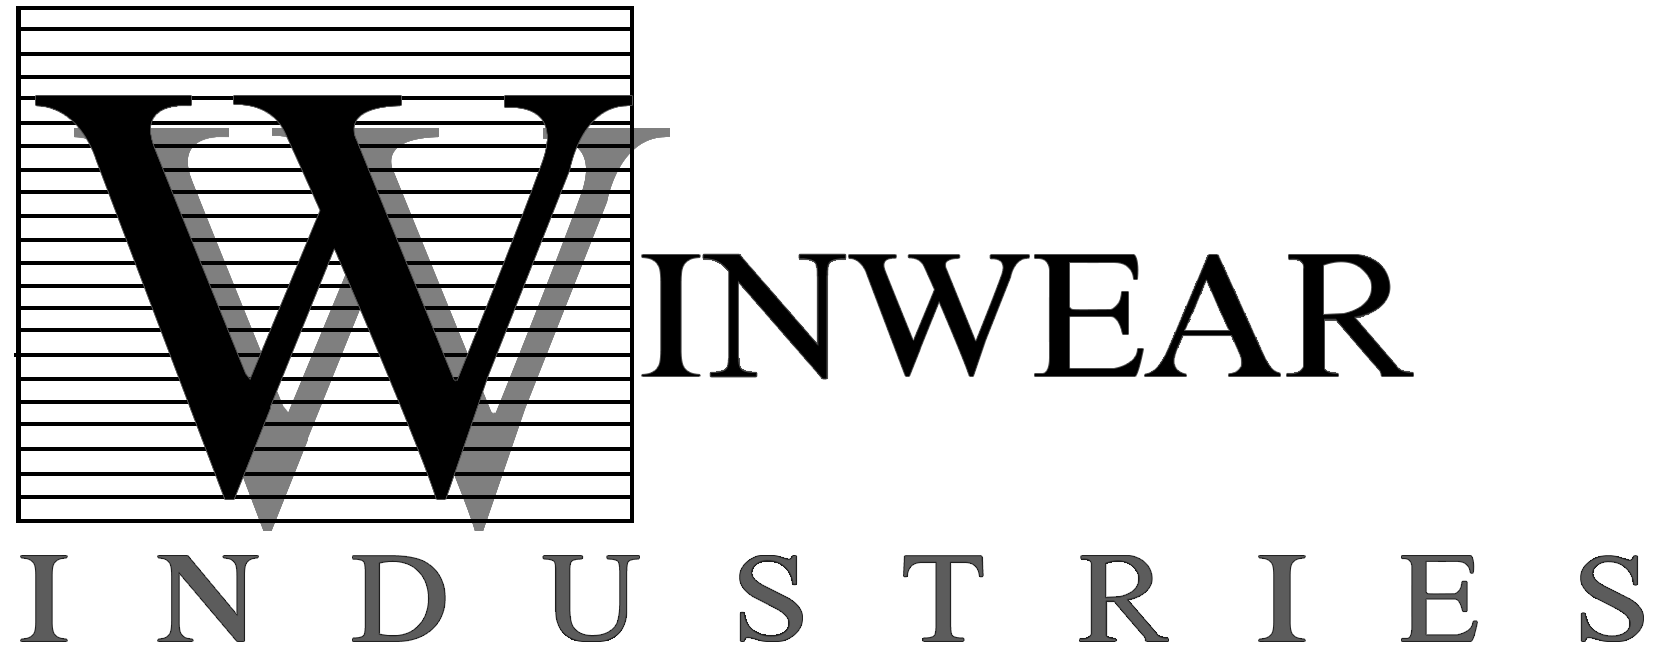 Winwear Industries | Z Blinds Fresno